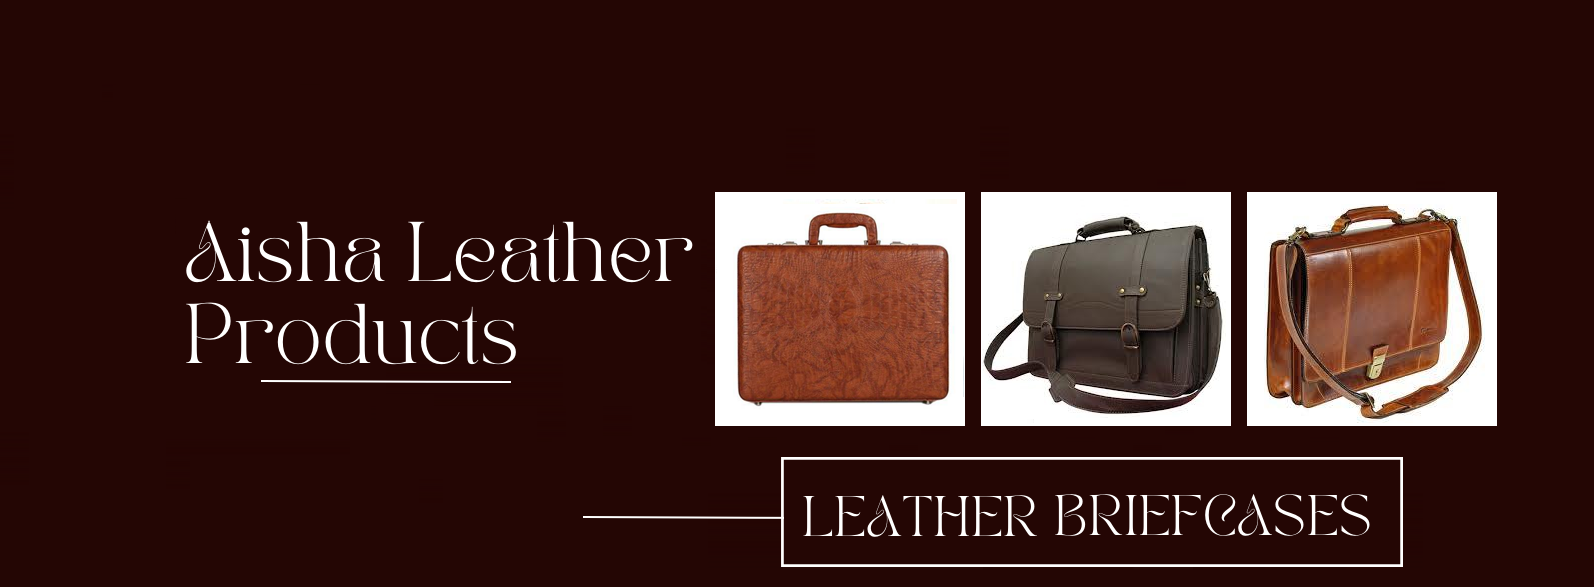 Aisha Leather Products